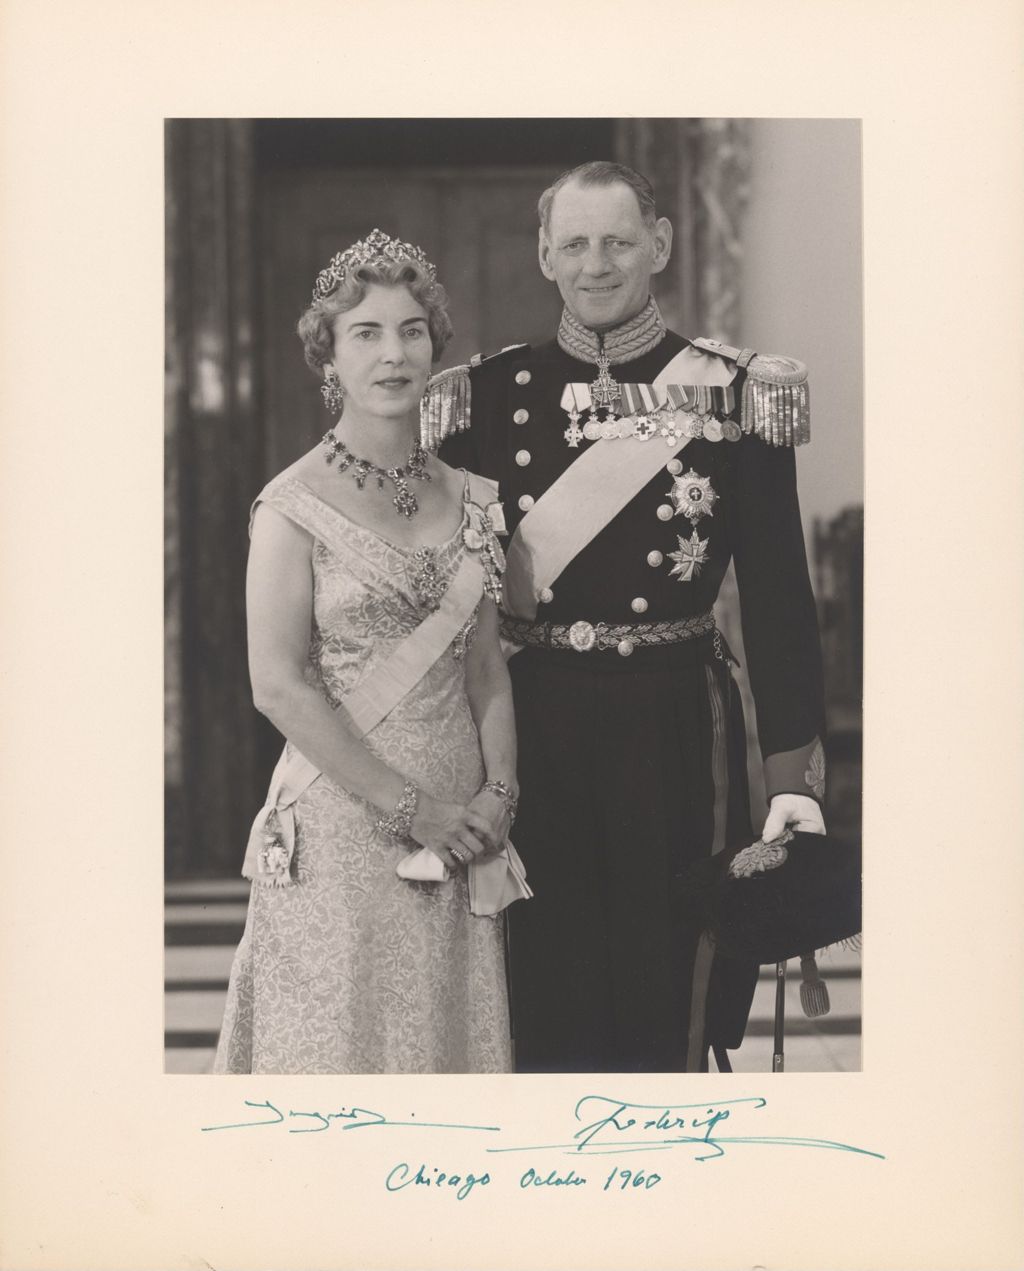 Miniature of Queen Ingrid and King Frederik IX of Denmark